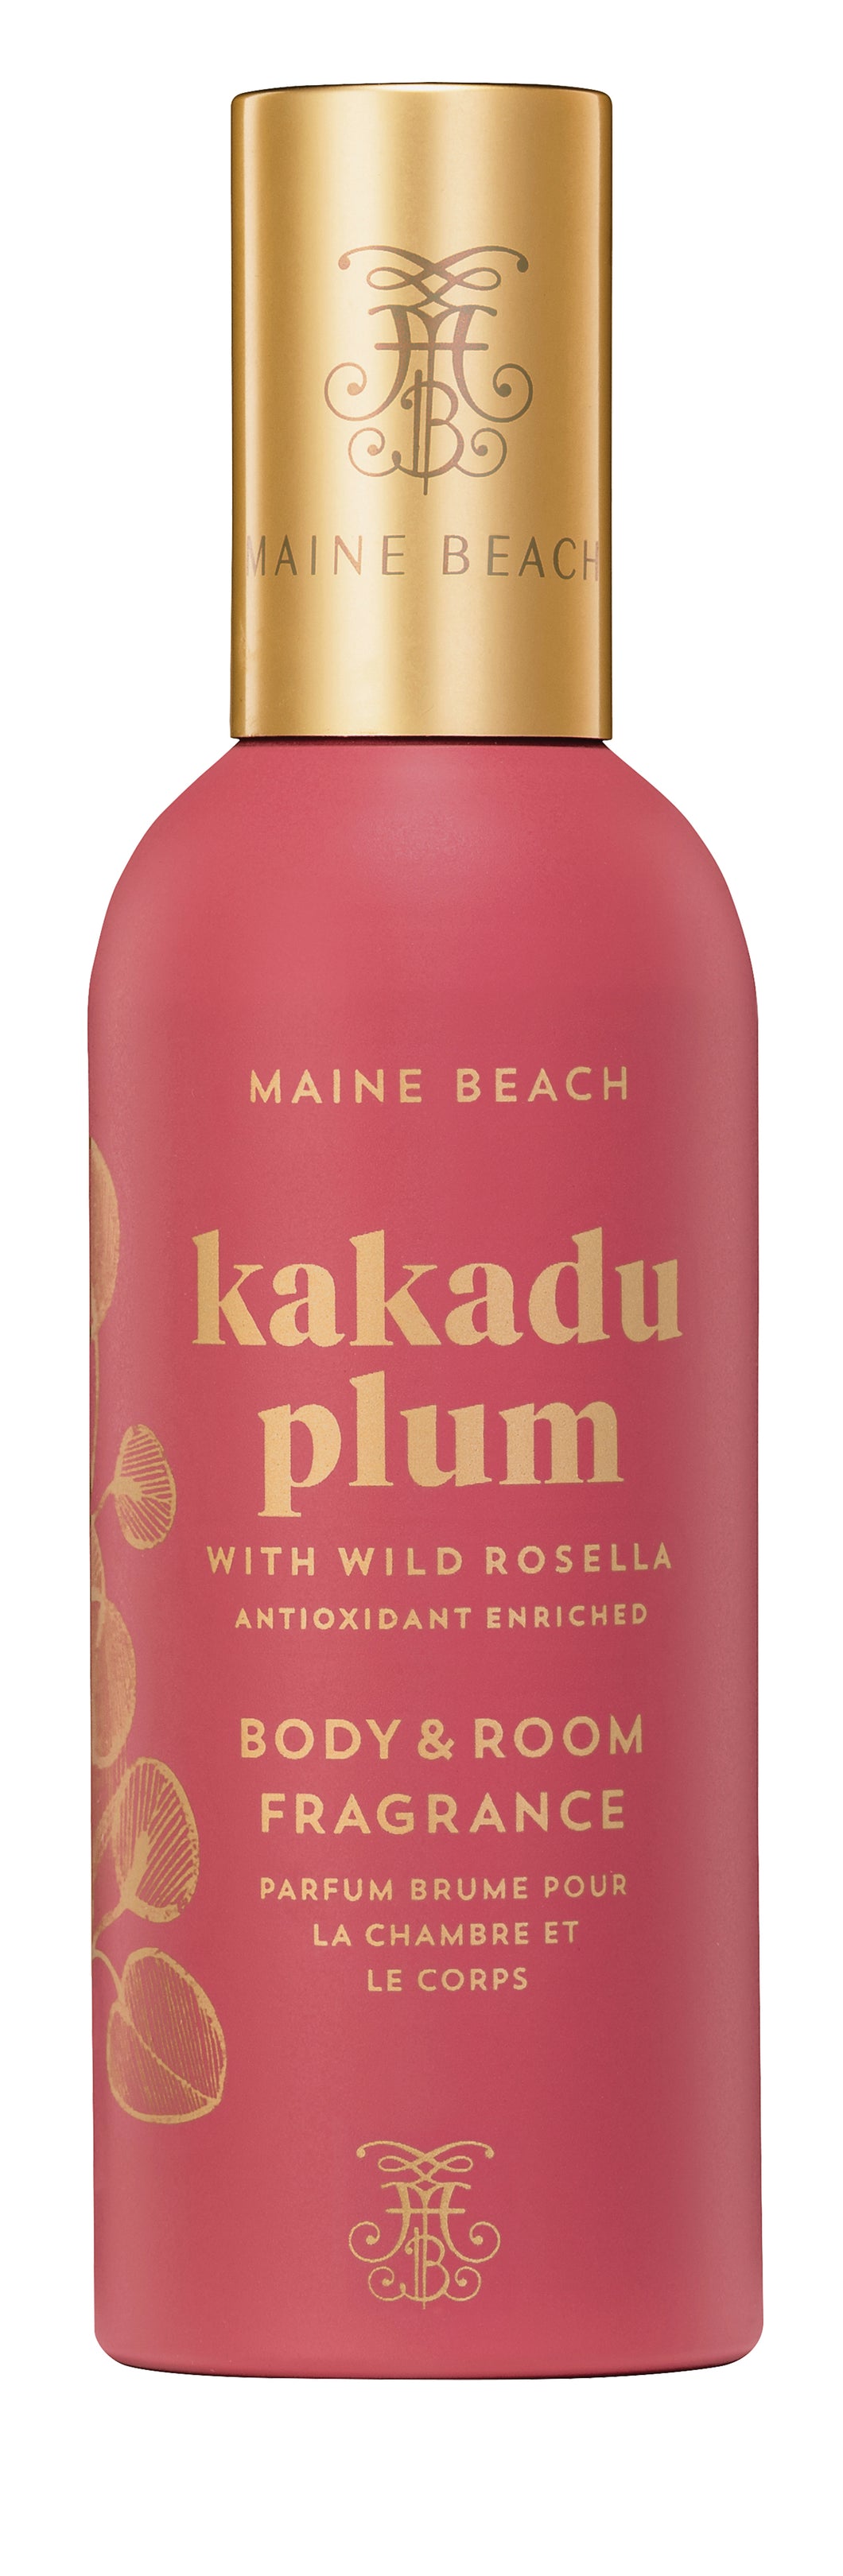 Maine Beach Kakadu Plum Room & Body Fragrance 100ml